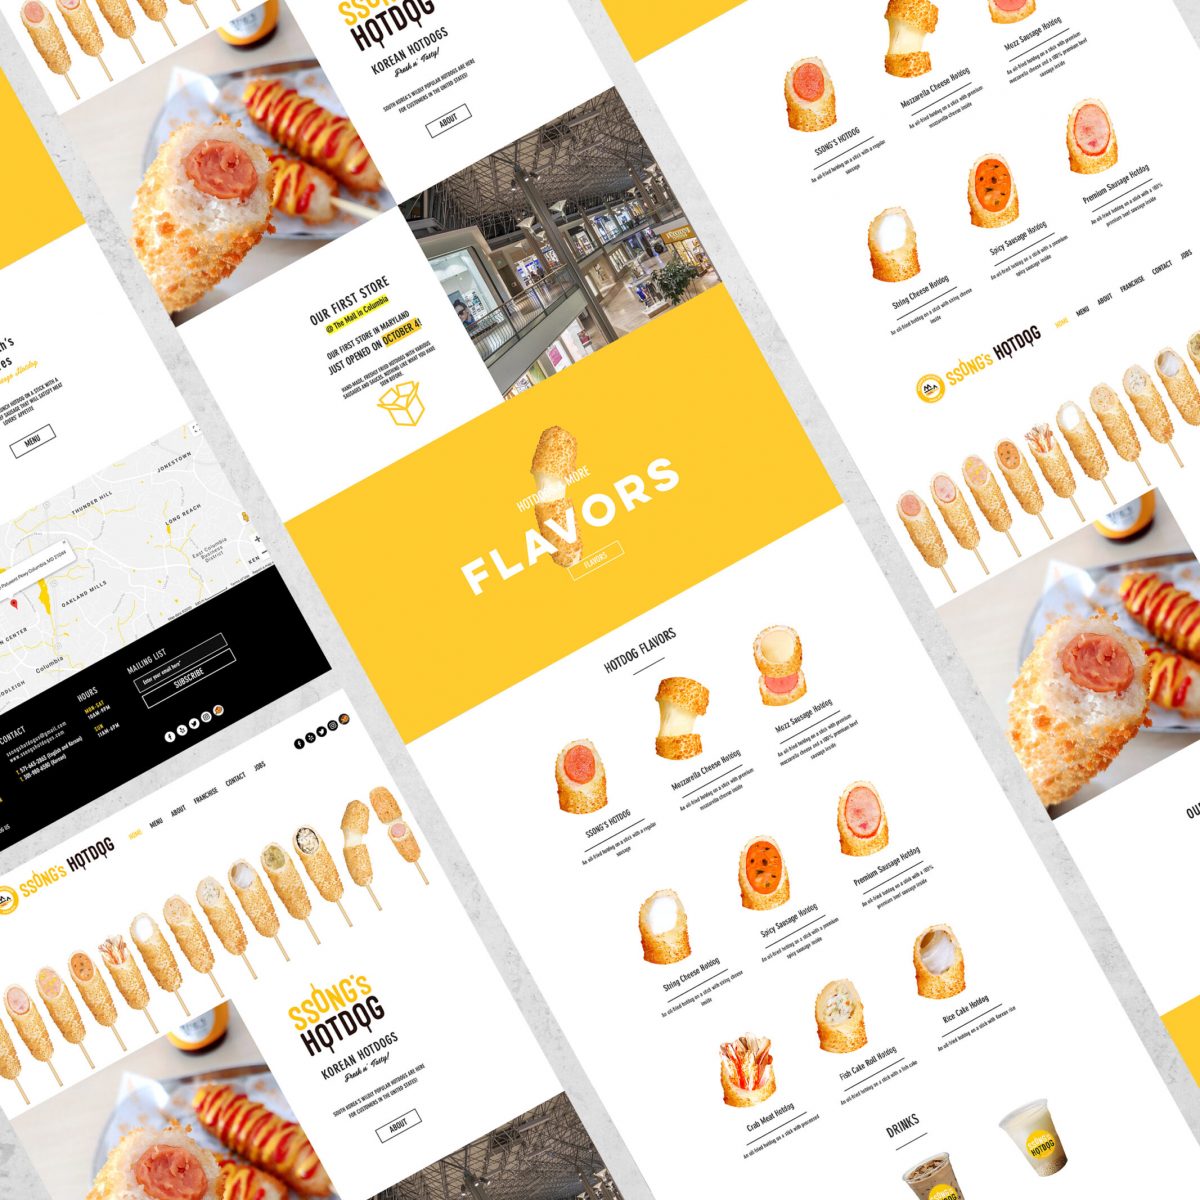 ssong's hotdog website design layout